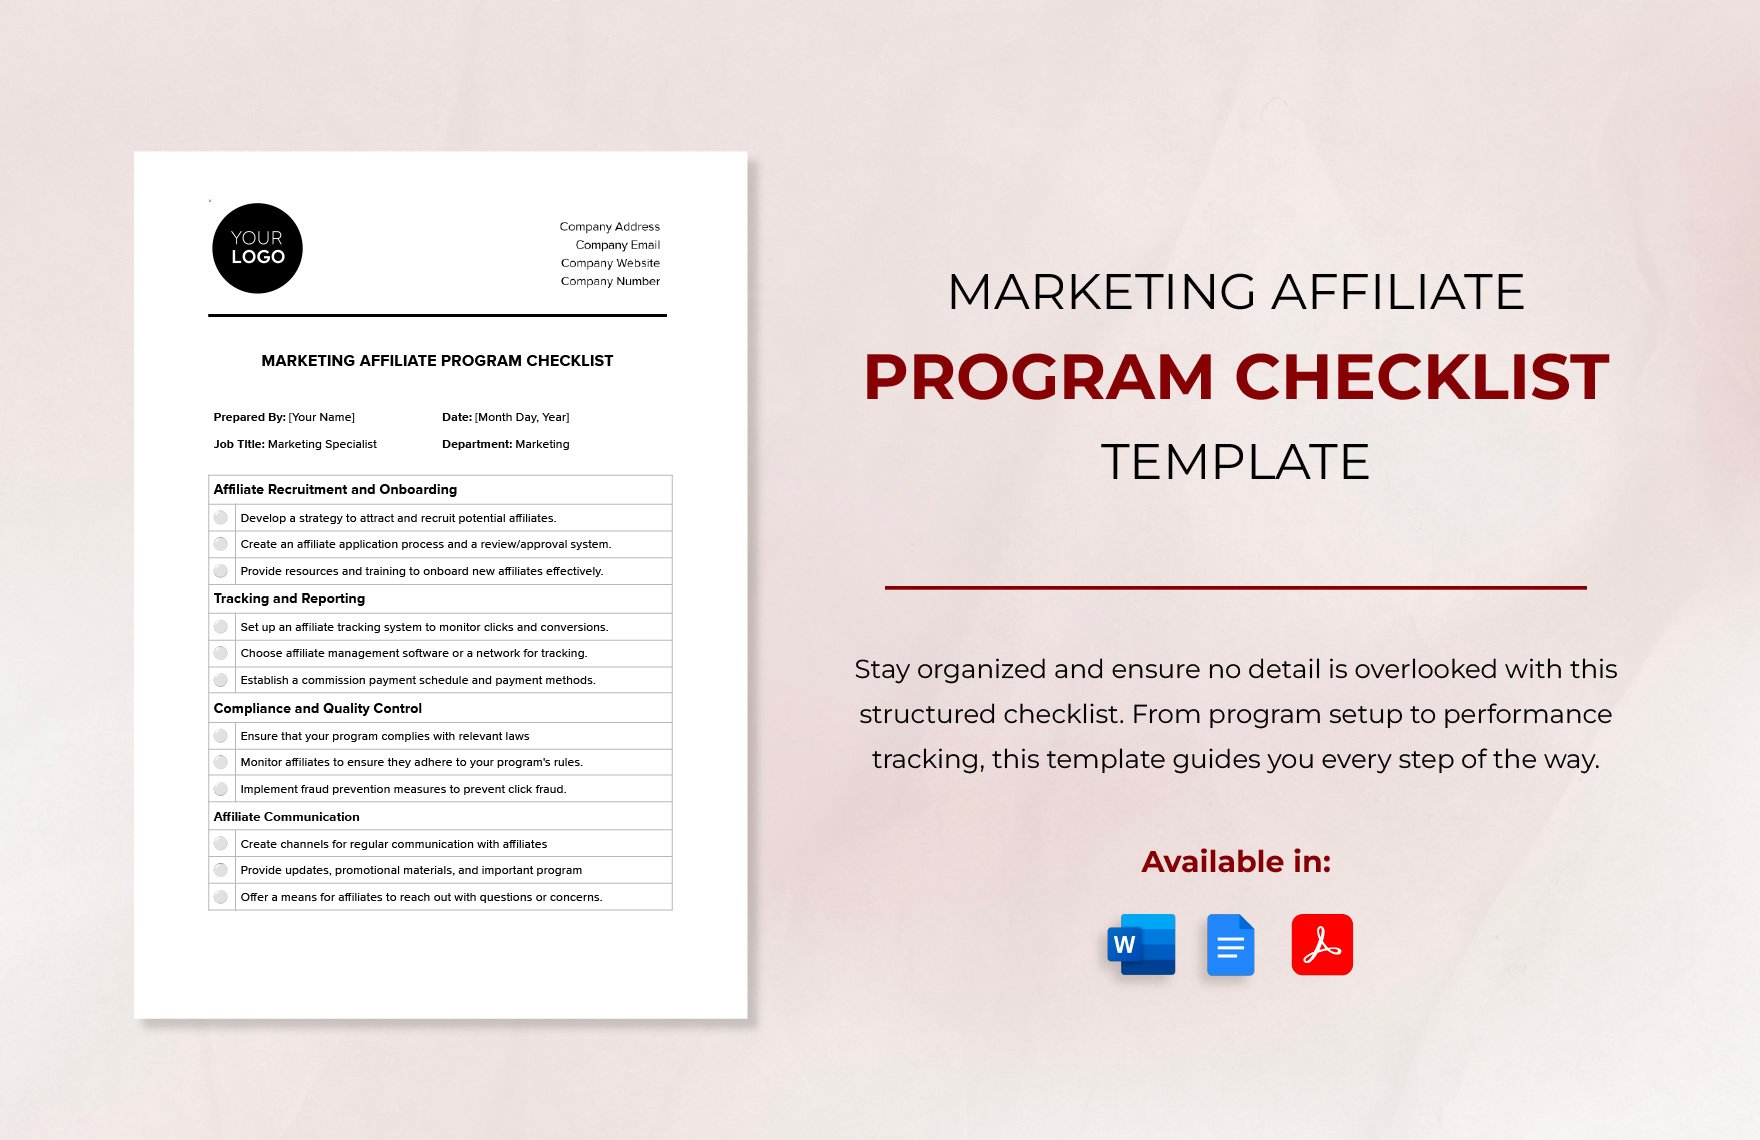 Marketing Affiliate Program Checklist Template in Word, Google Docs, PDF